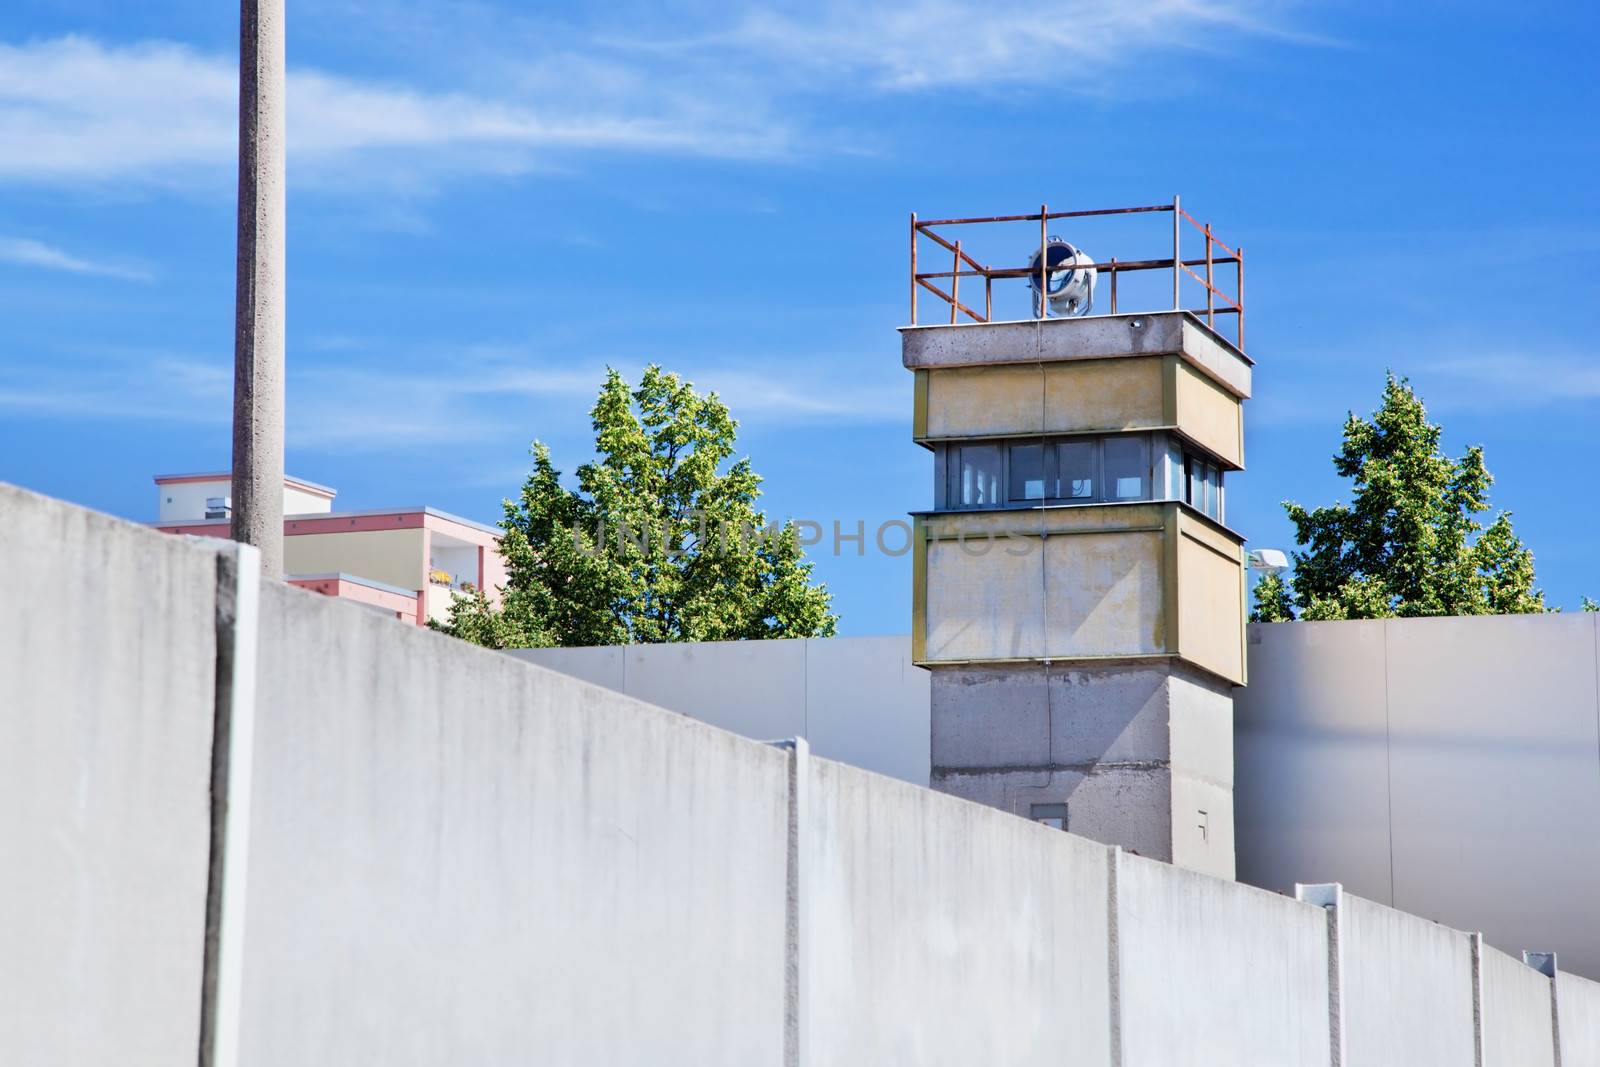 Berlin Wall Memorial, a watchtower in the inner area. The Gedenkstatte Berliner Mauer 